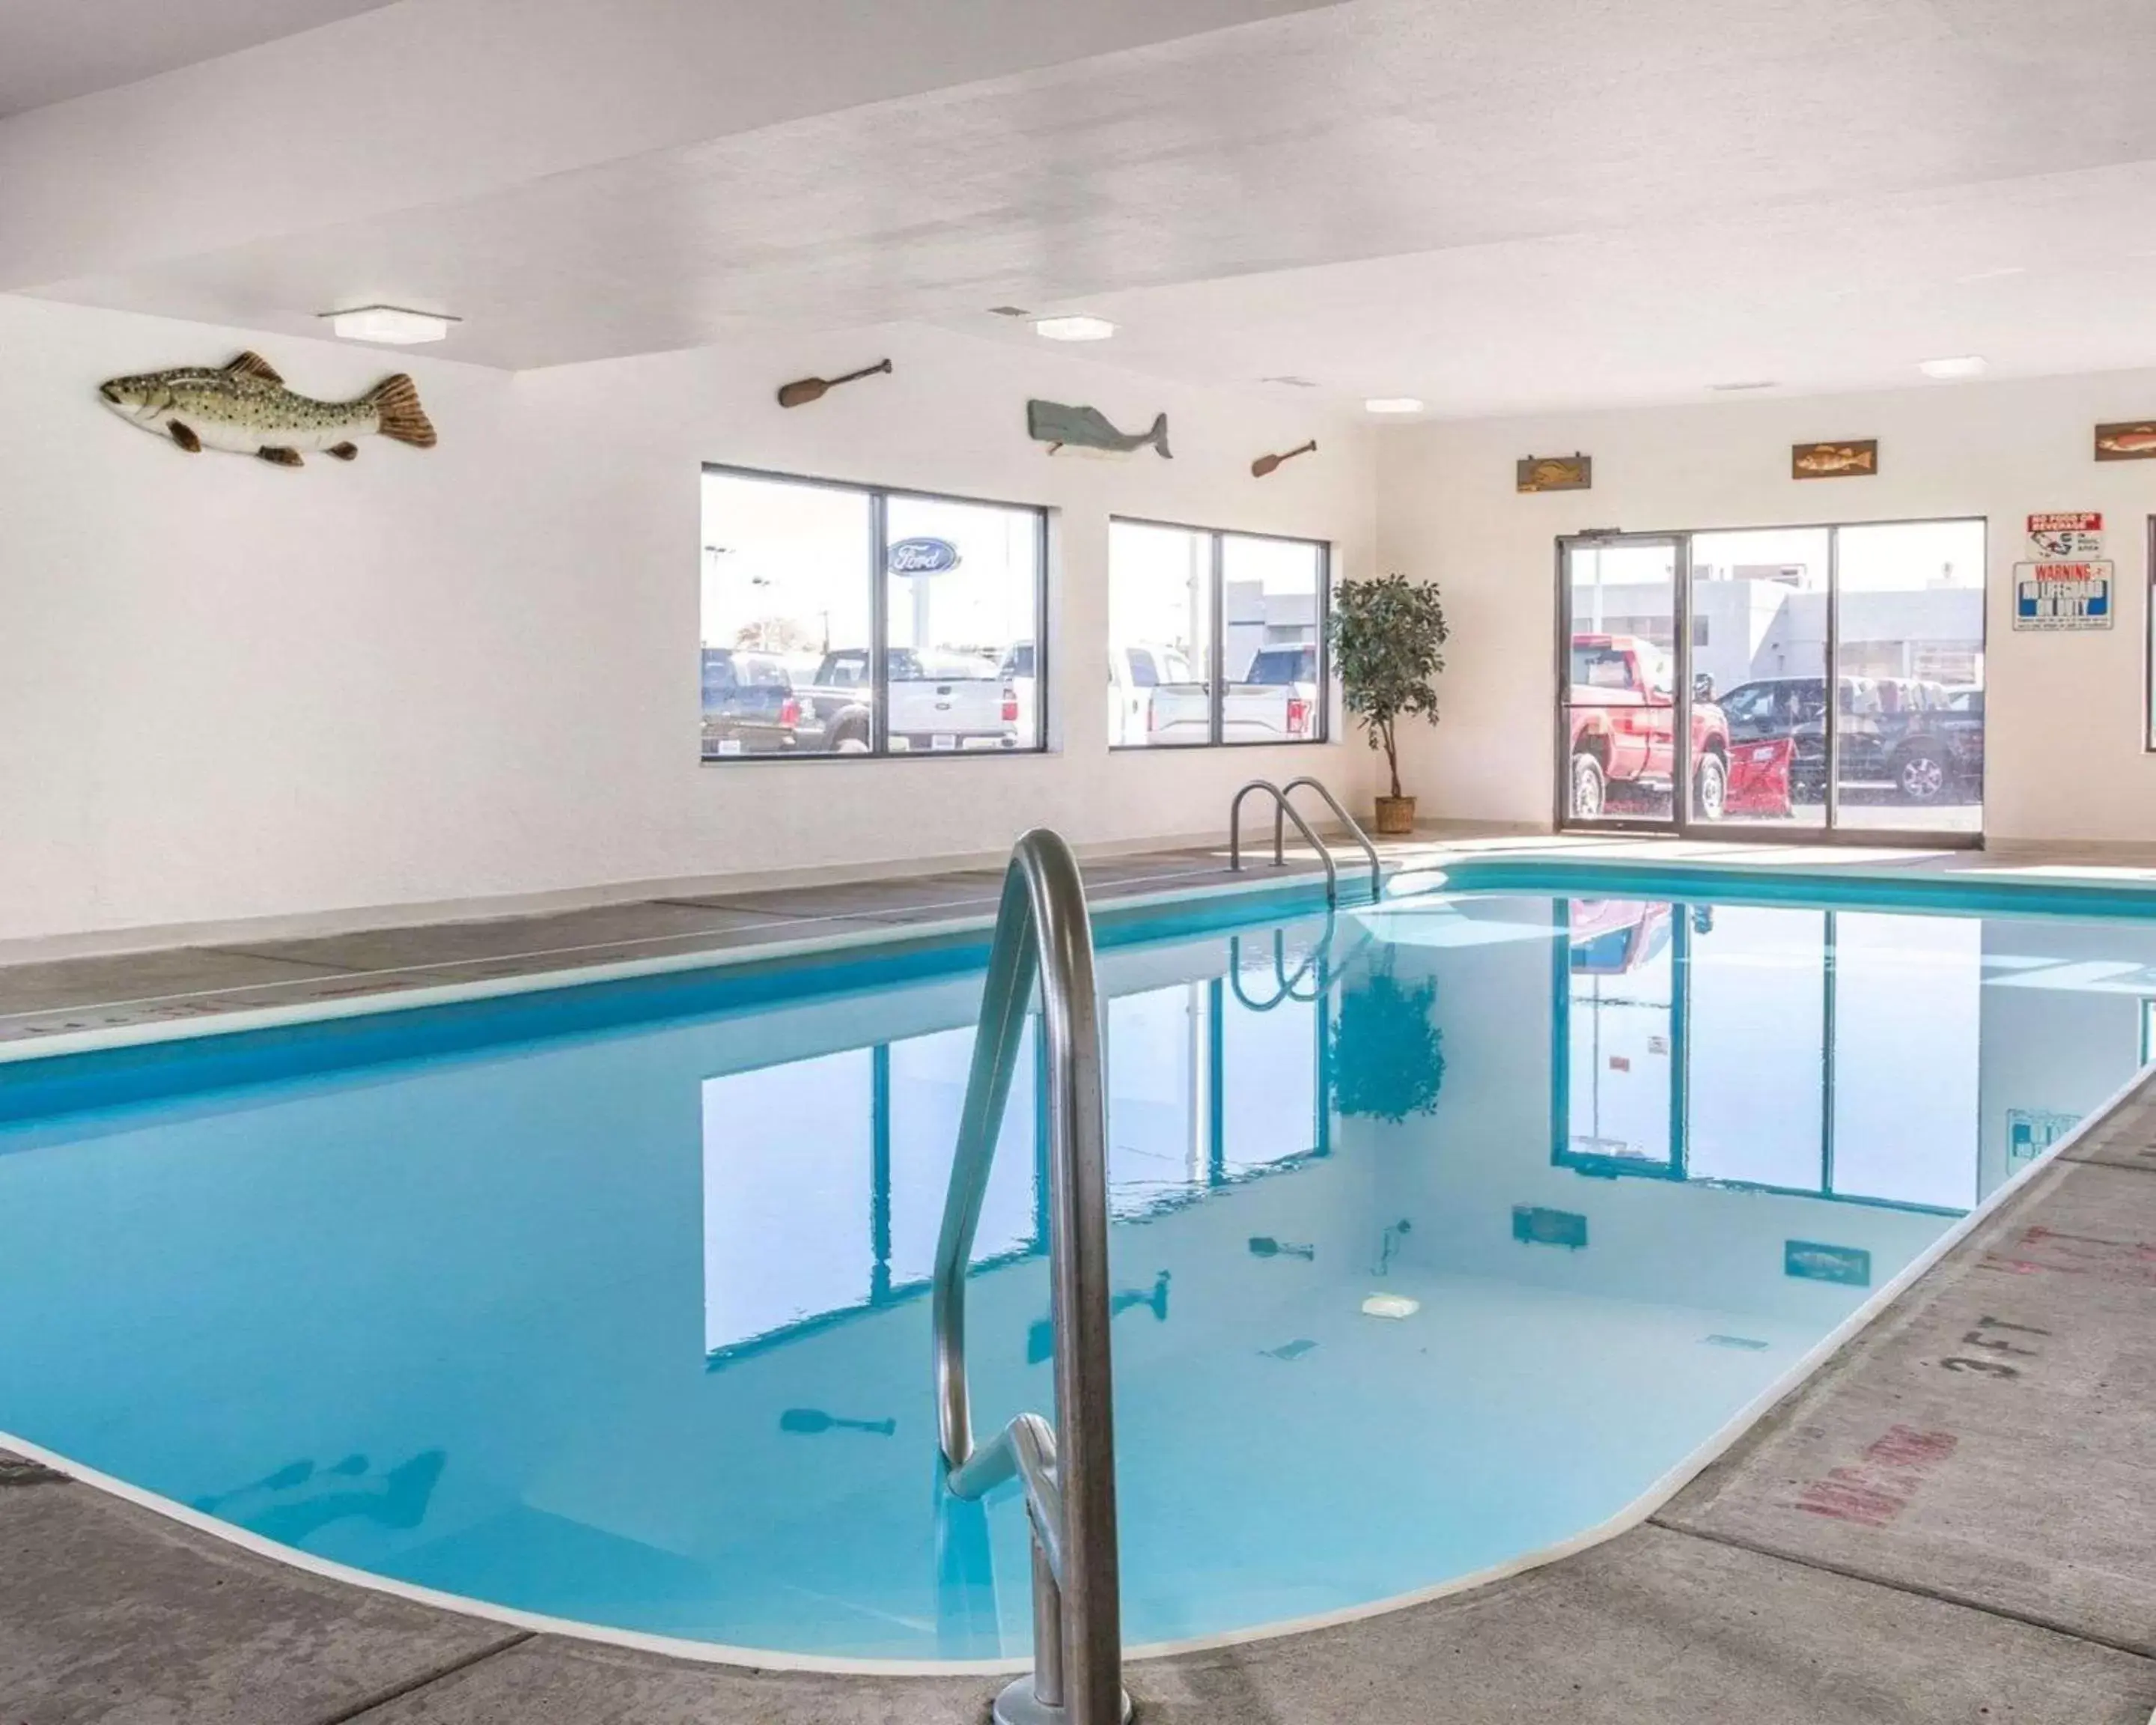 On site, Swimming Pool in Comfort Inn & Suites Maumee - Toledo - I80-90